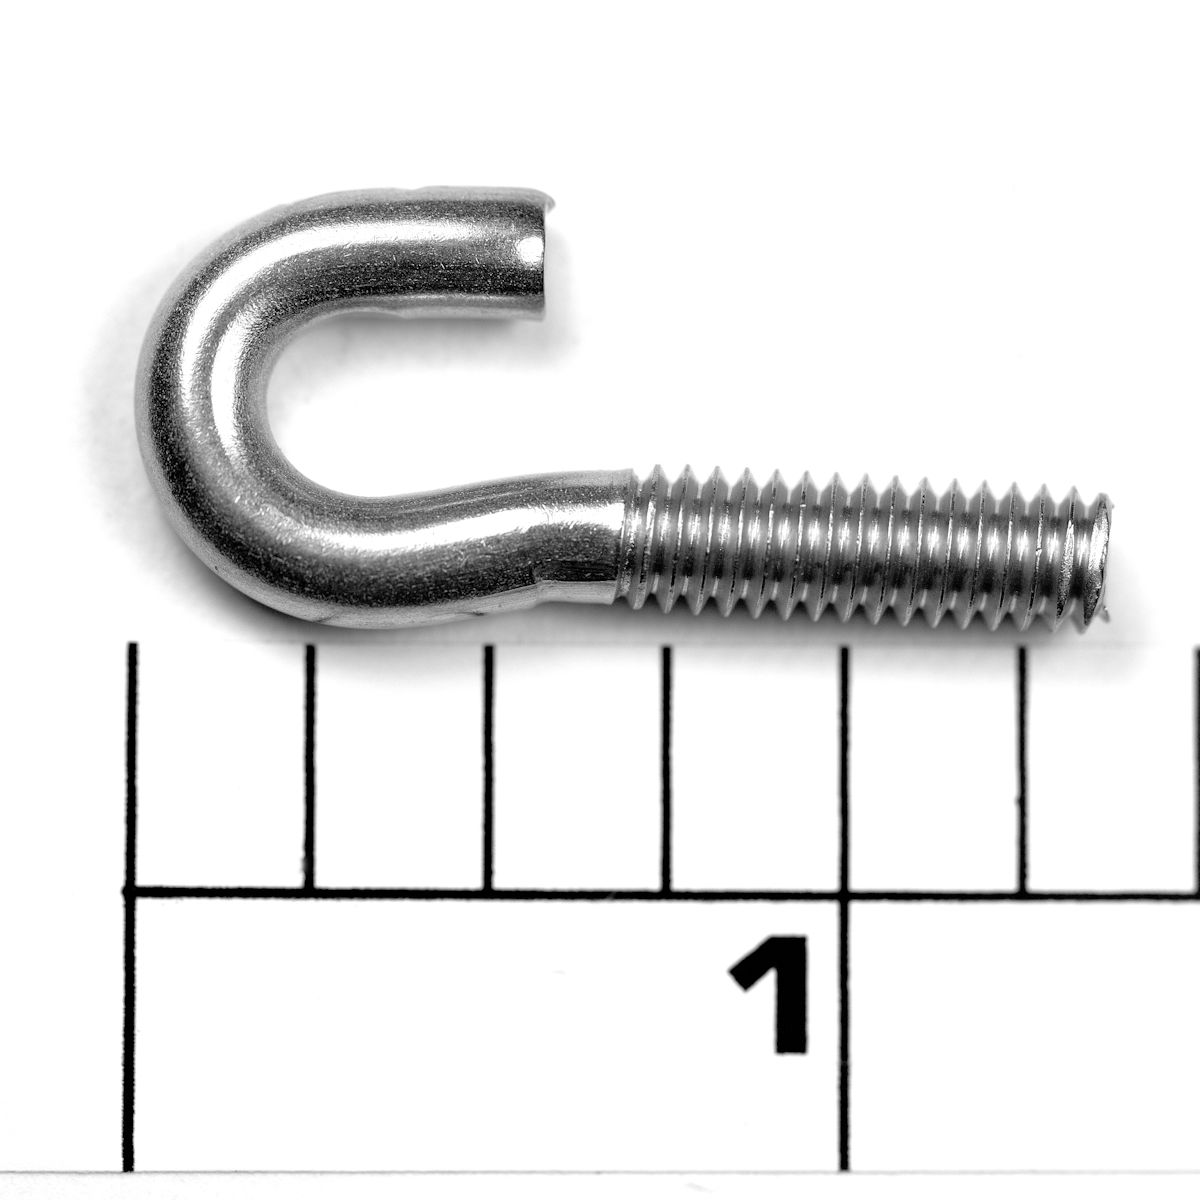 99-115 Hook Screw, upper part of harness, LH threading, short (1.37 in)